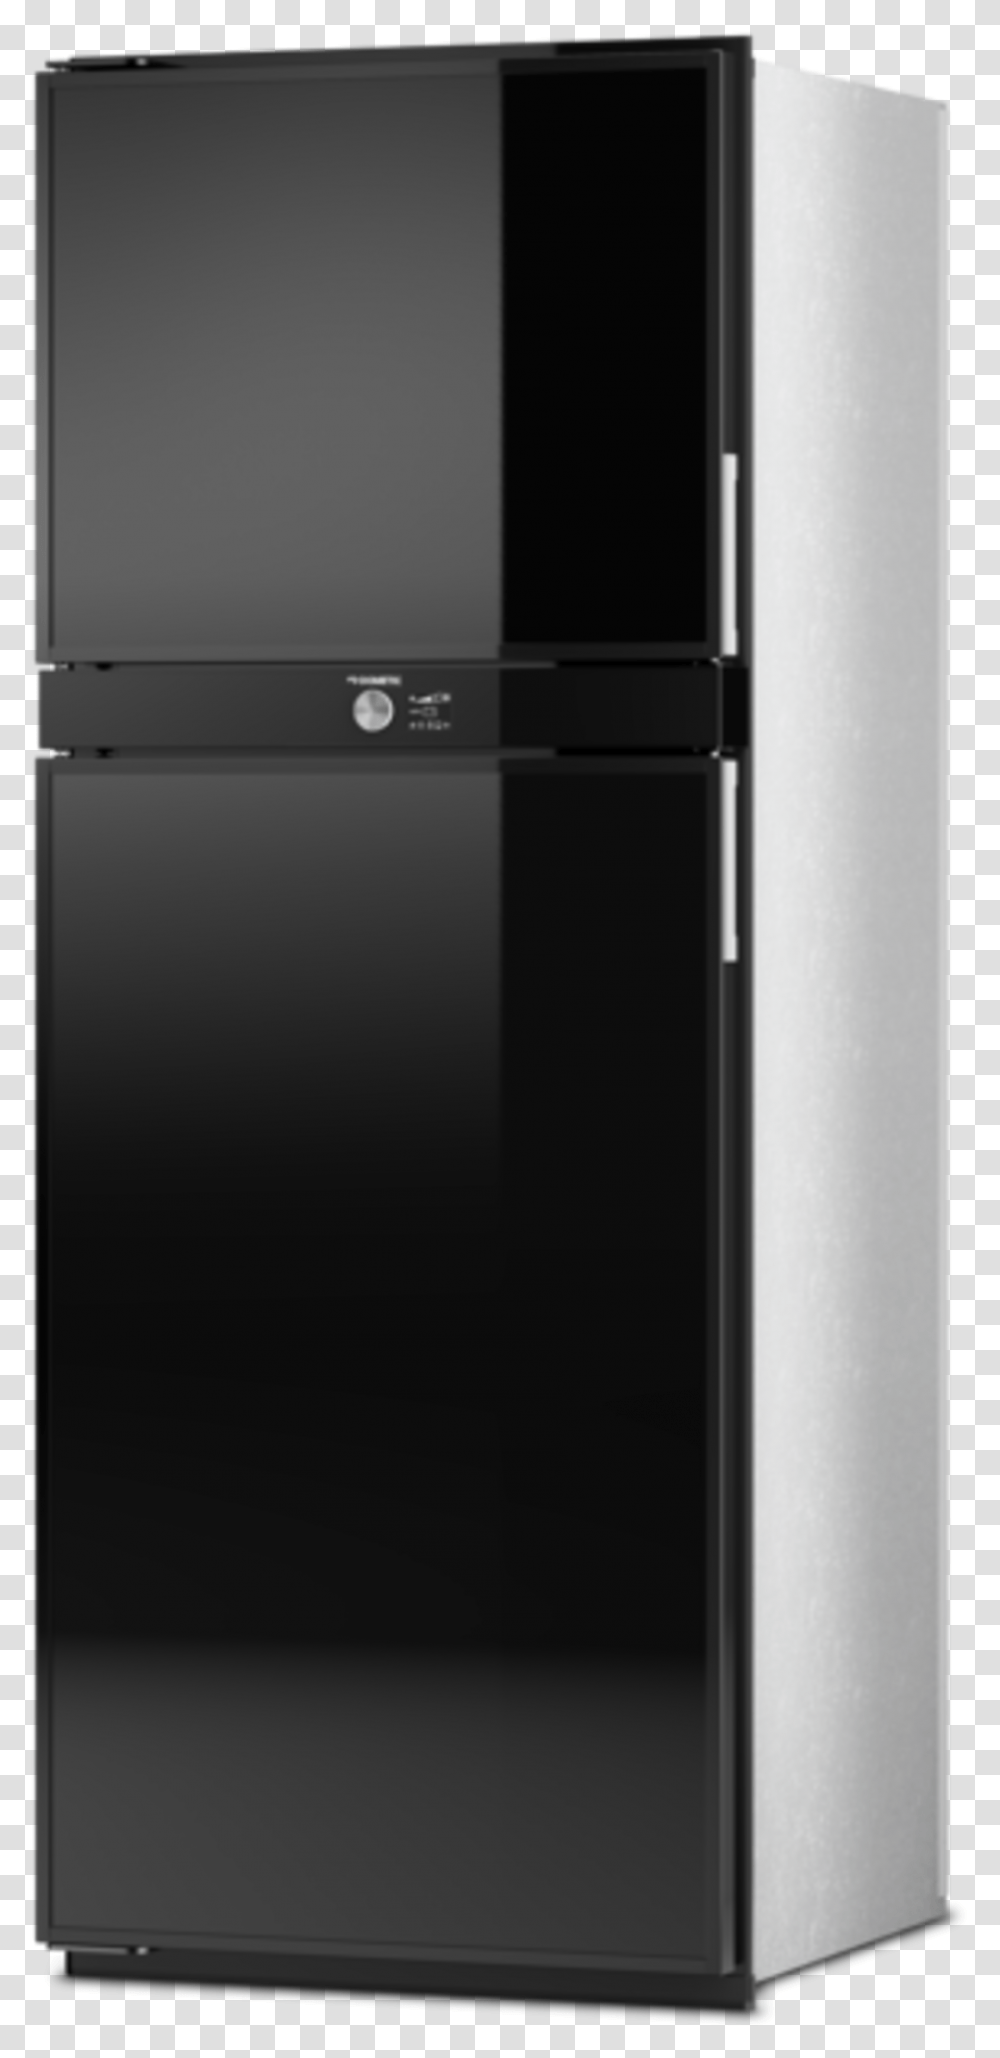 Fridge Images, Appliance, Refrigerator, Dishwasher, Electronics Transparent Png